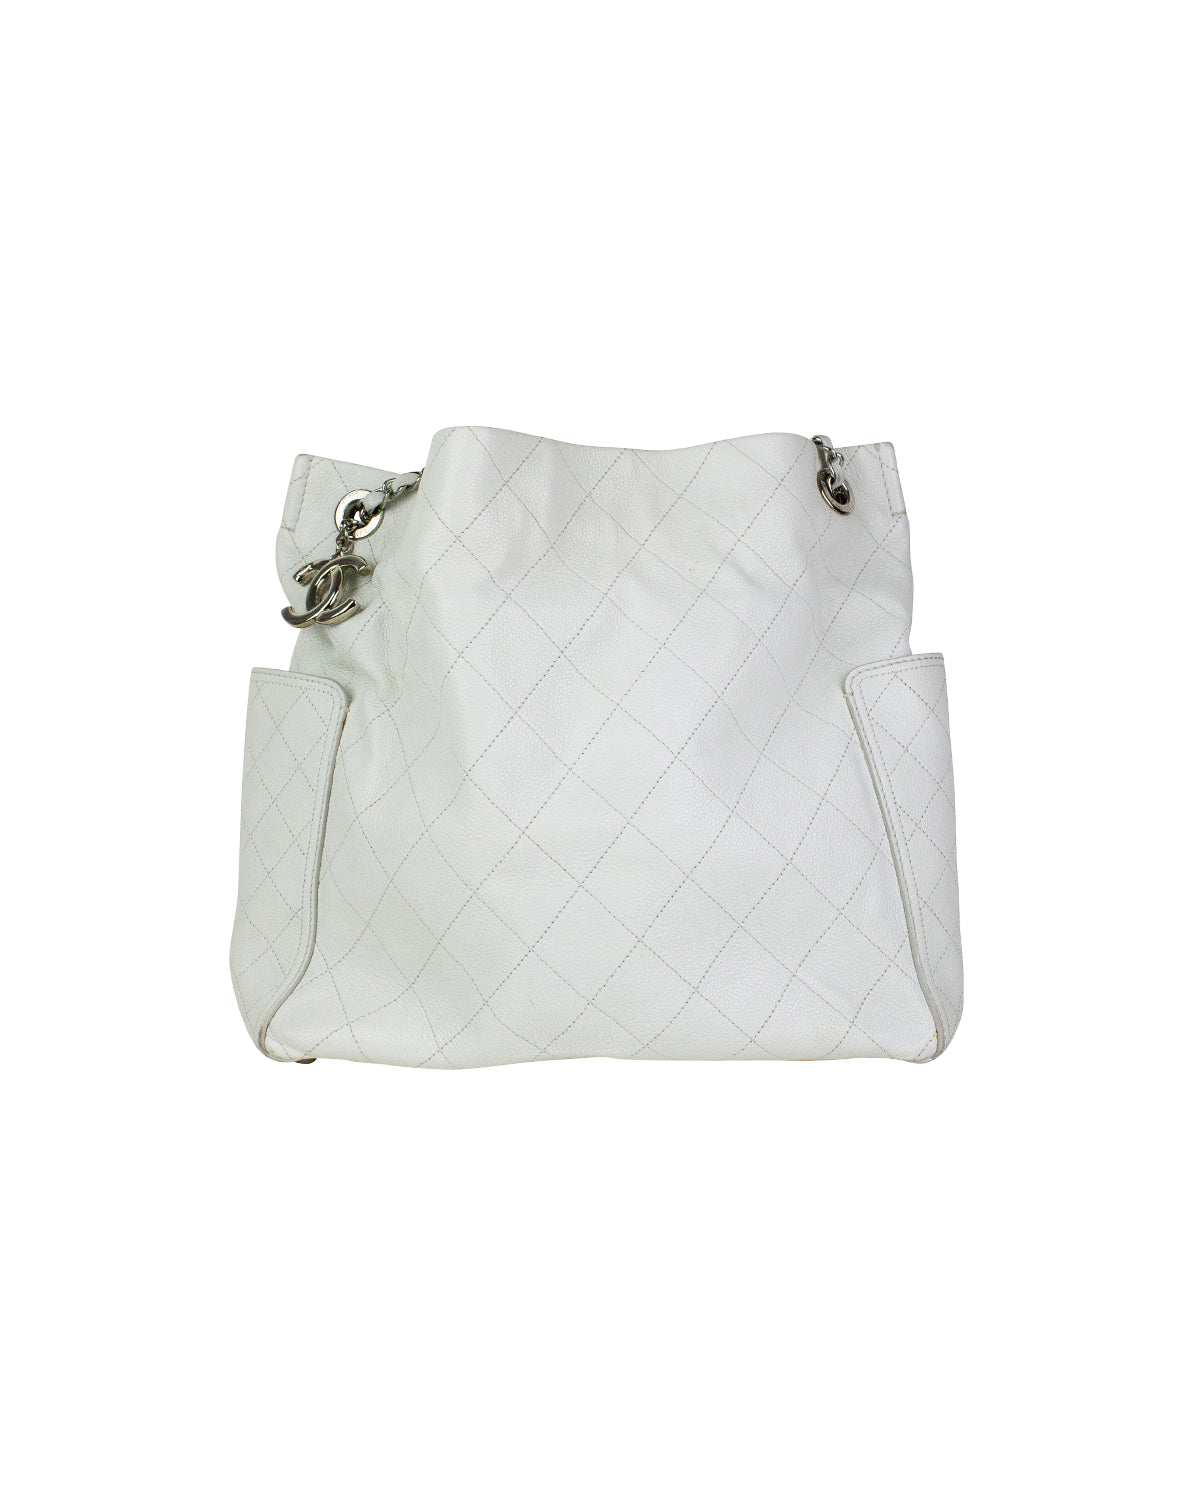 Chanel Pocket Tote White Caviar Bag 